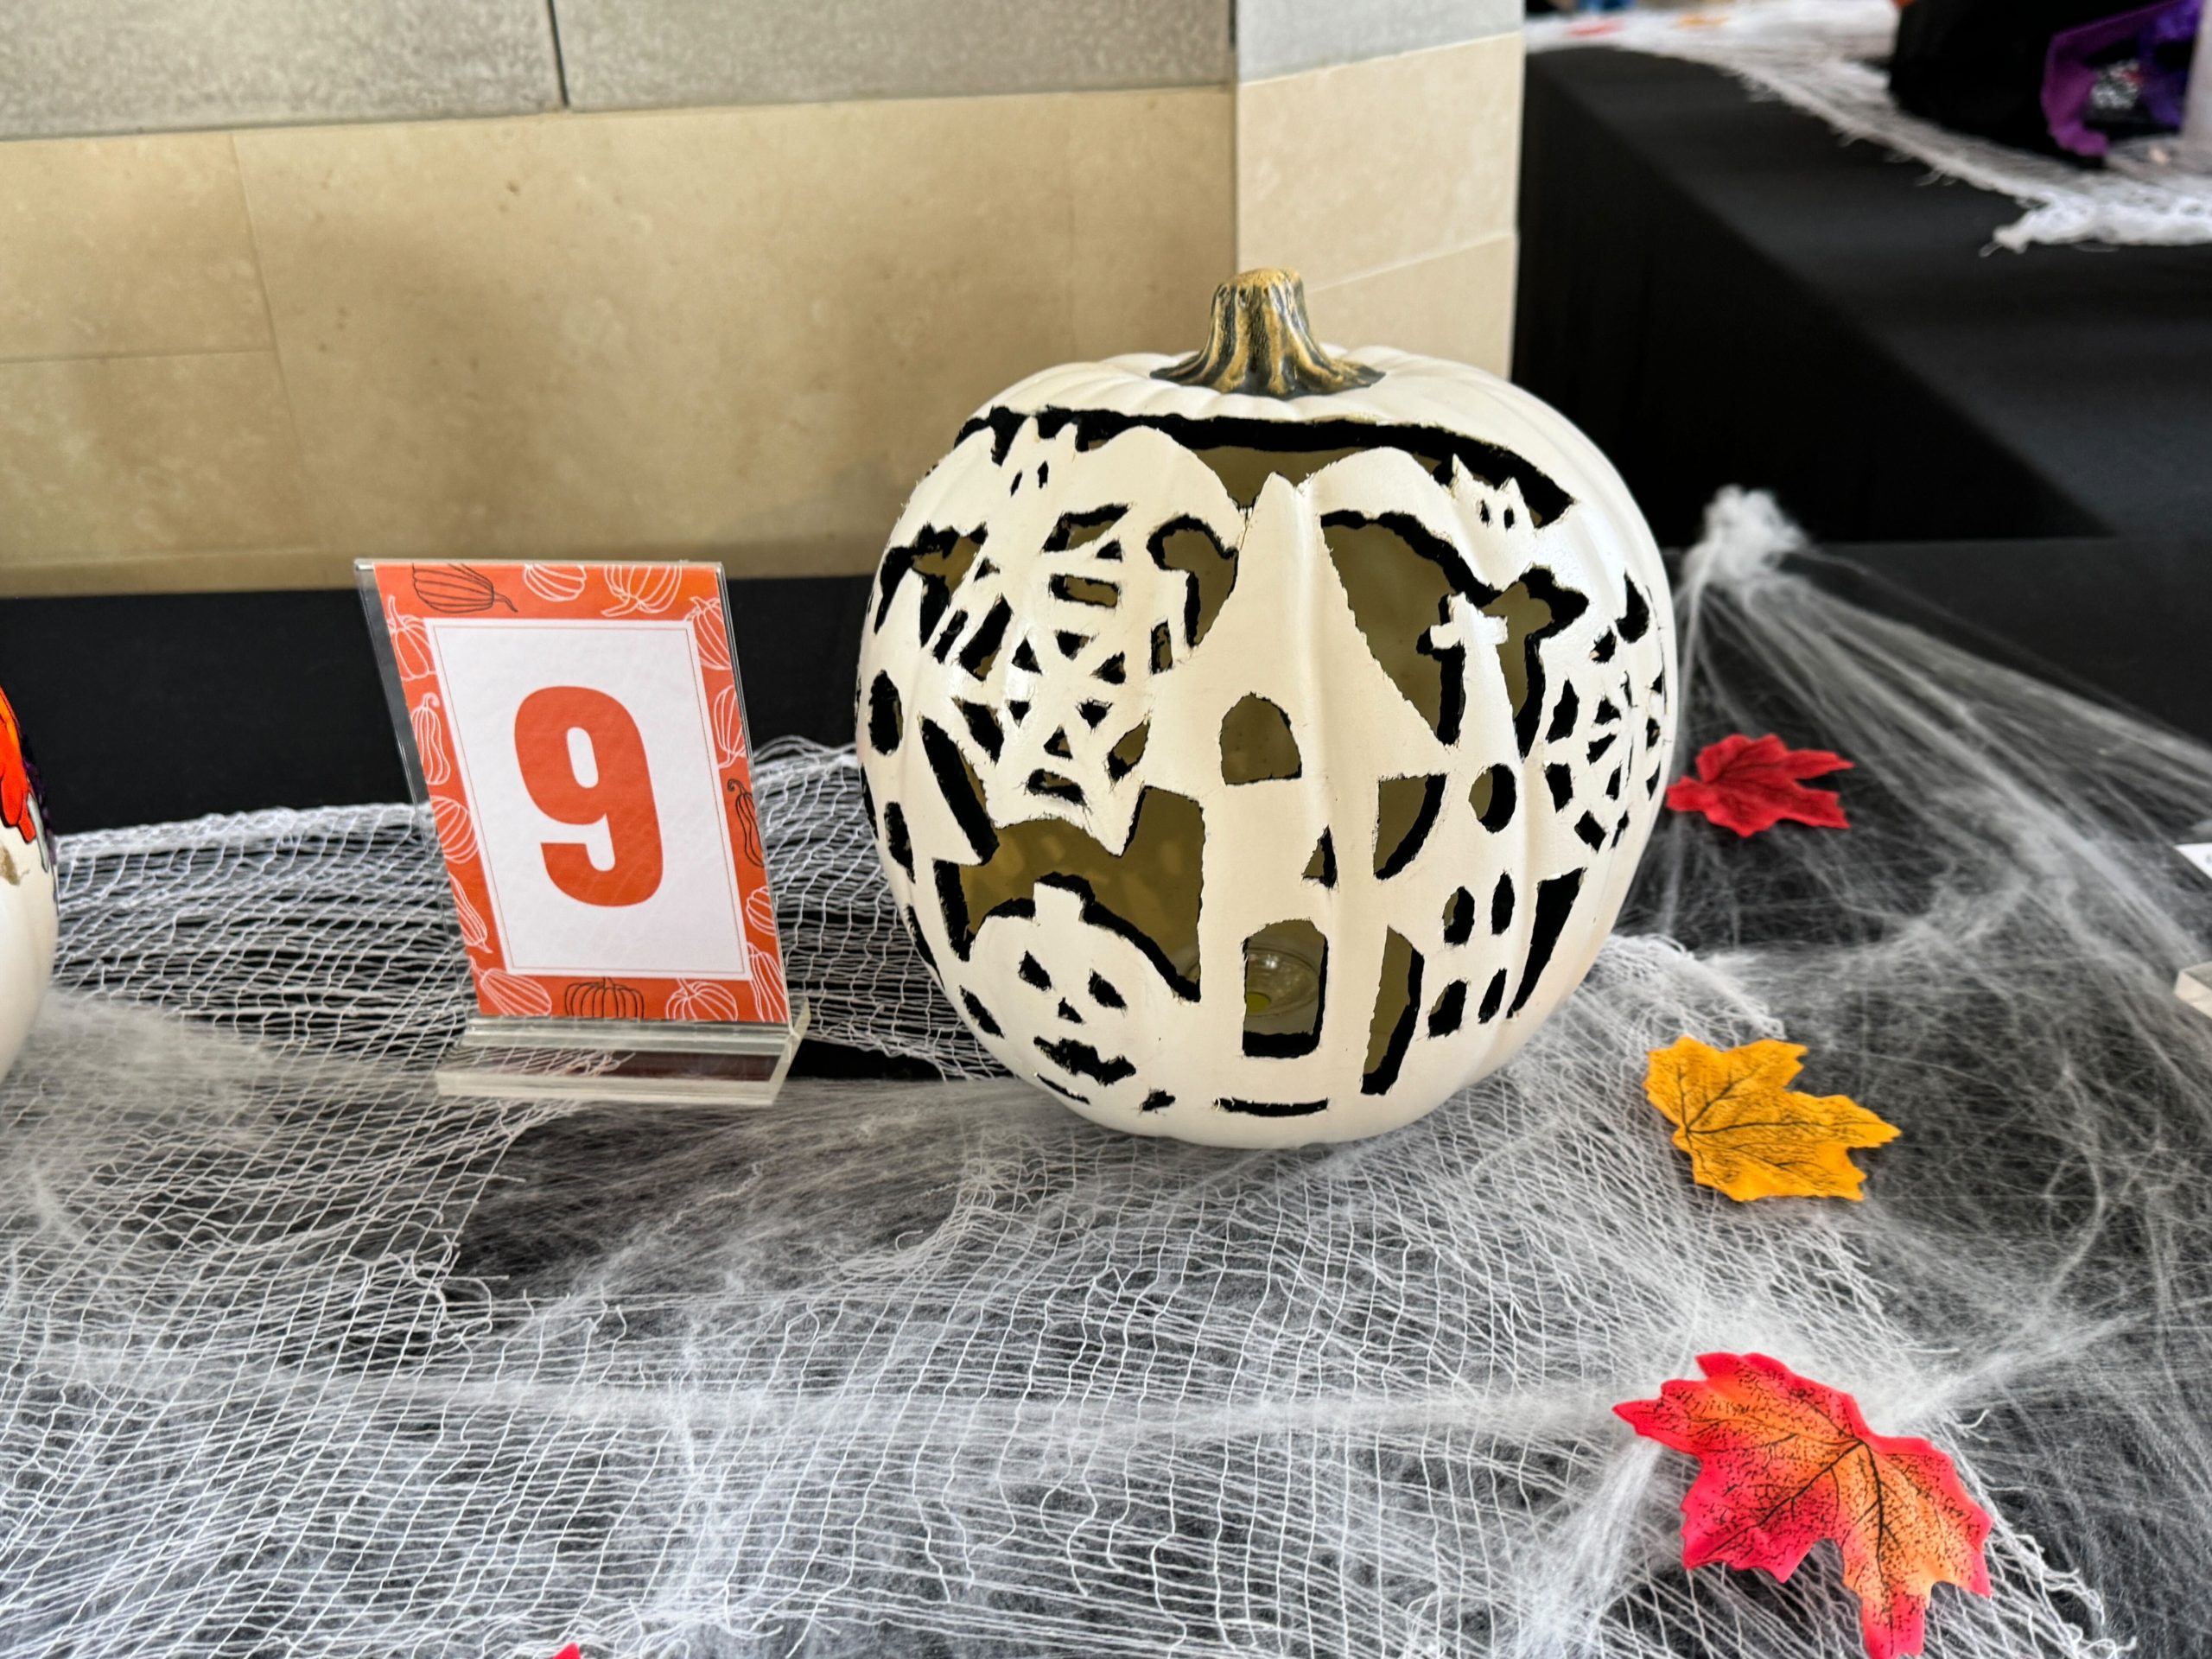 cast members, pumpkin decorating contest